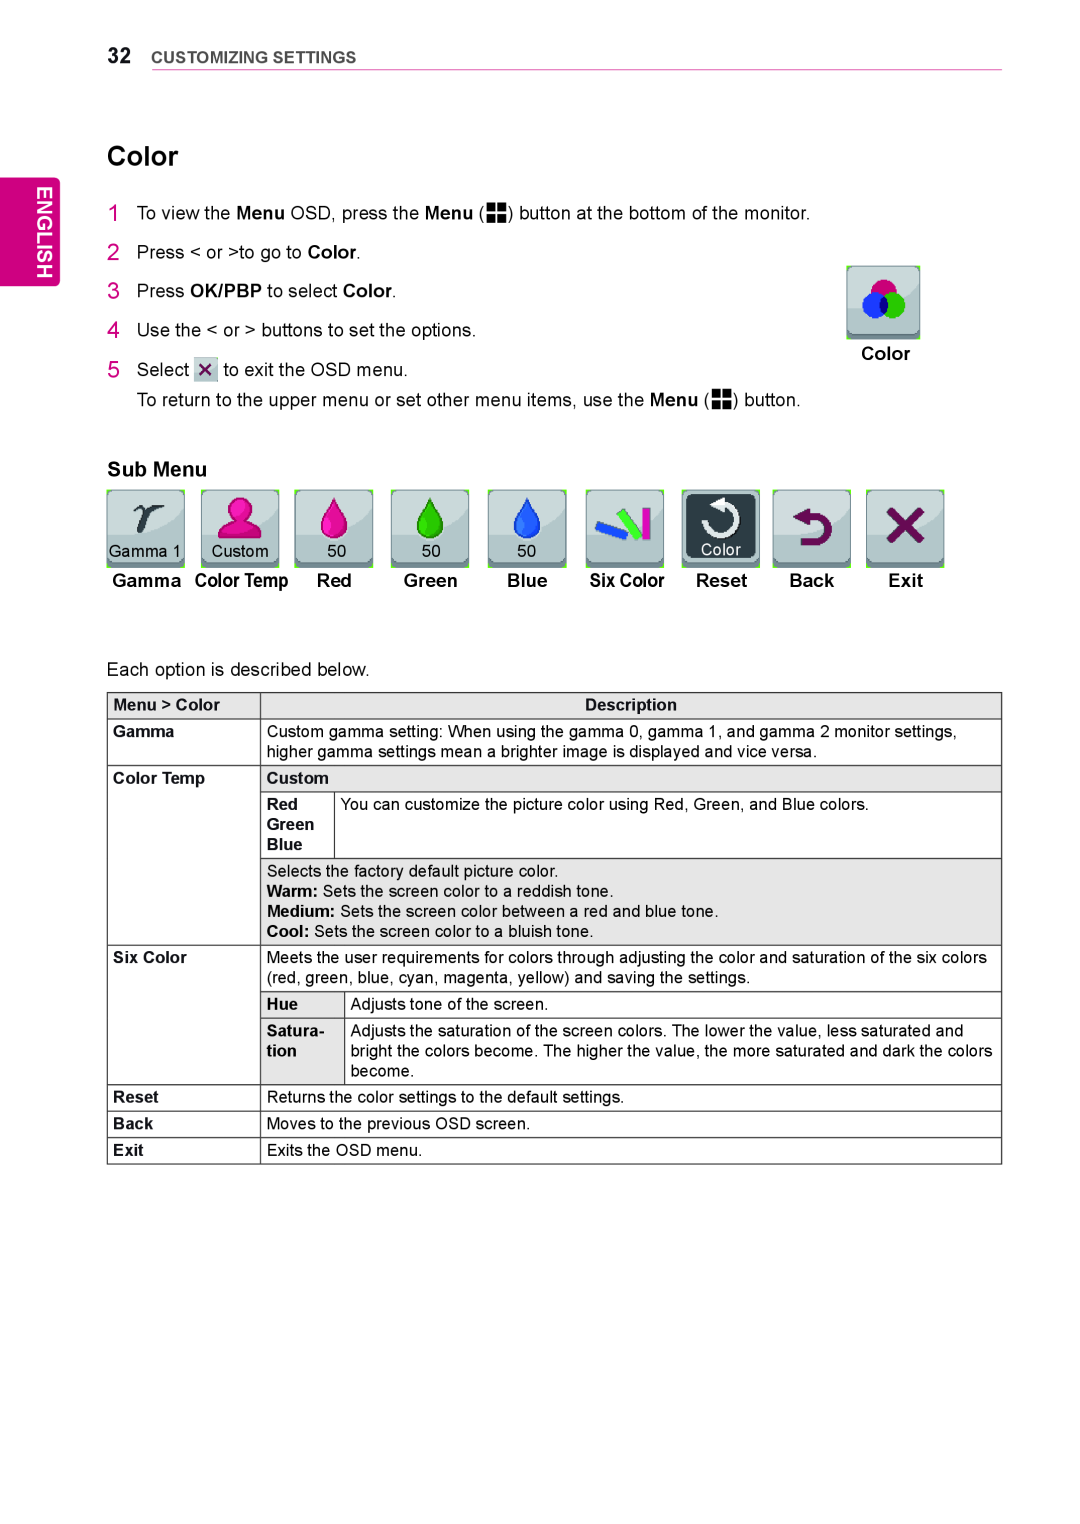 LG Electronics 29EA73, 29EB73 owner manual Color, English, Sub Menu, Customizing Settings 